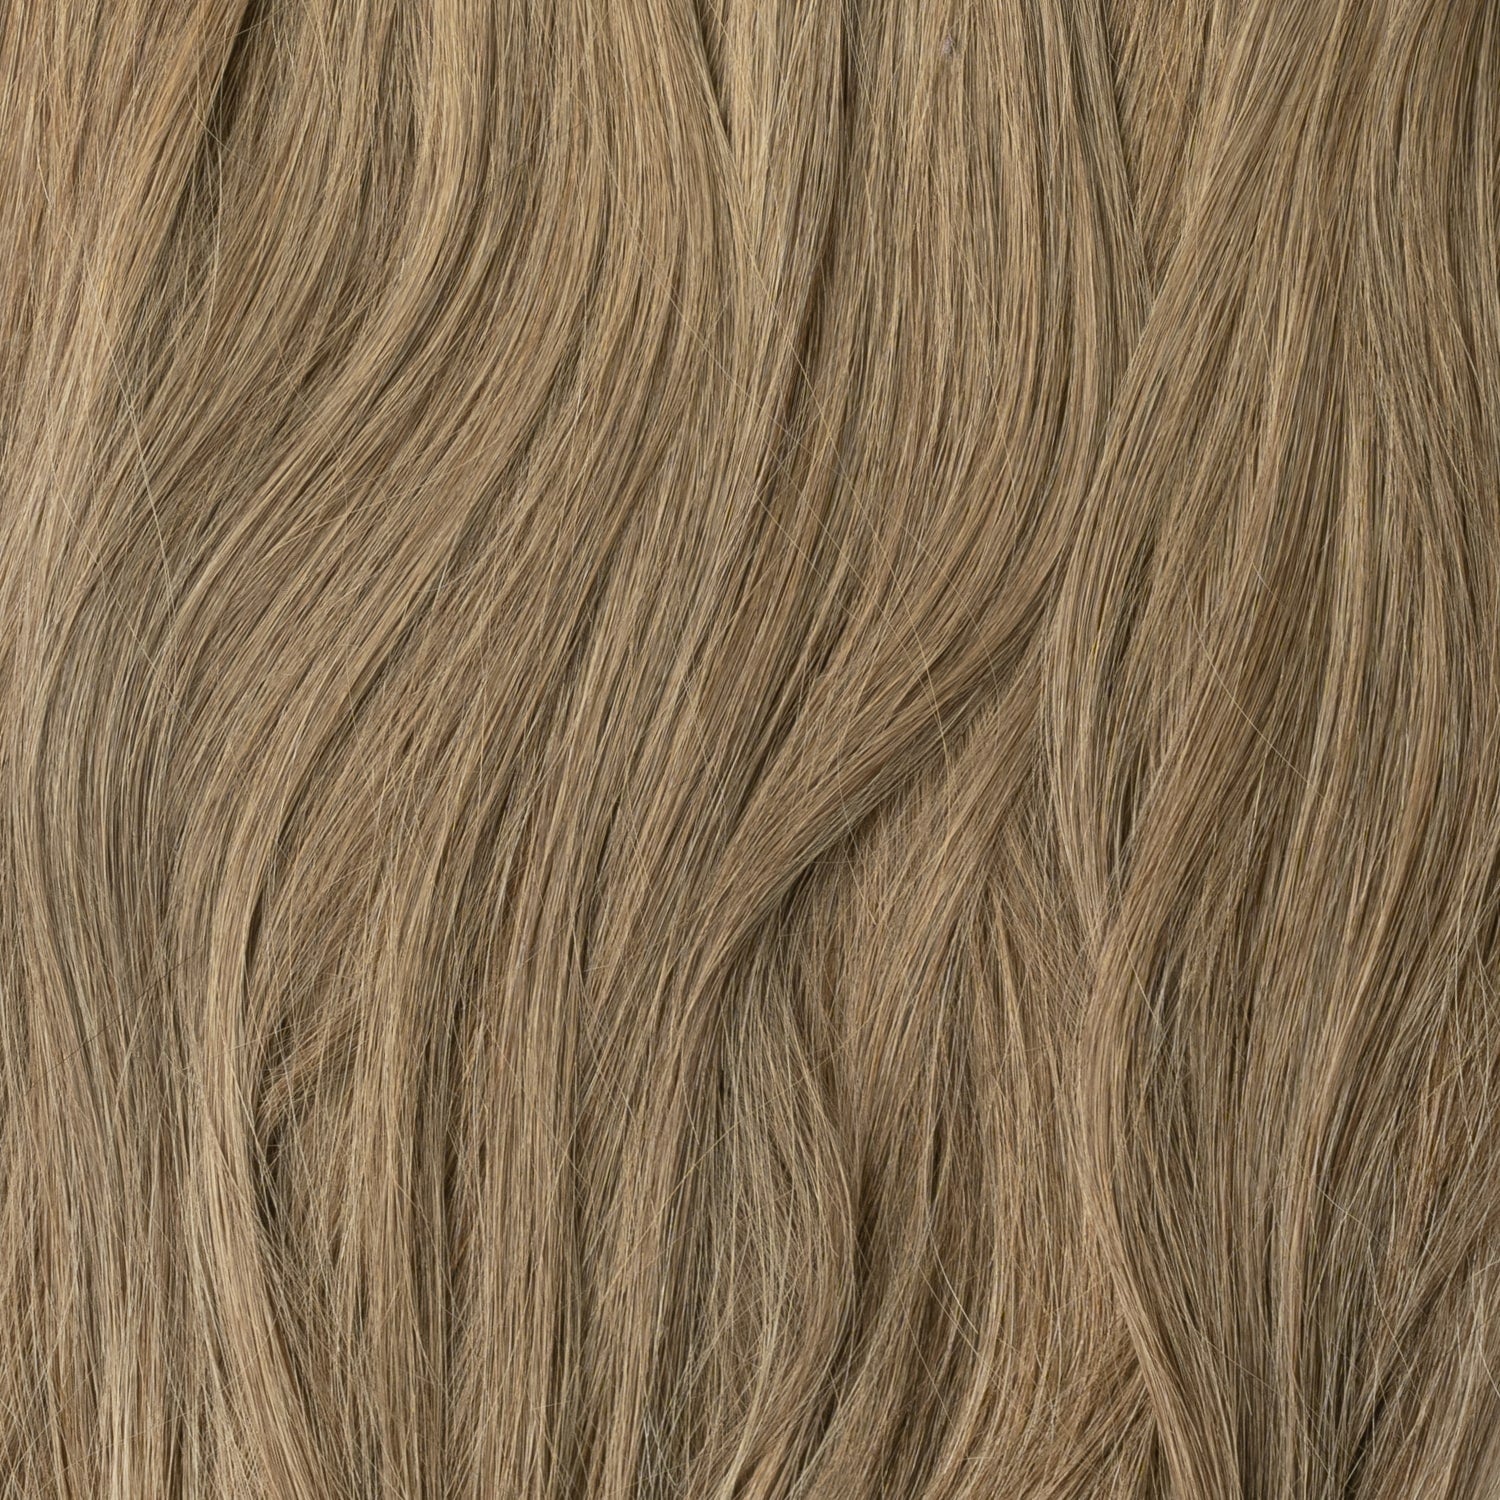 Halo hair extensions - Light Ash Brown 5B